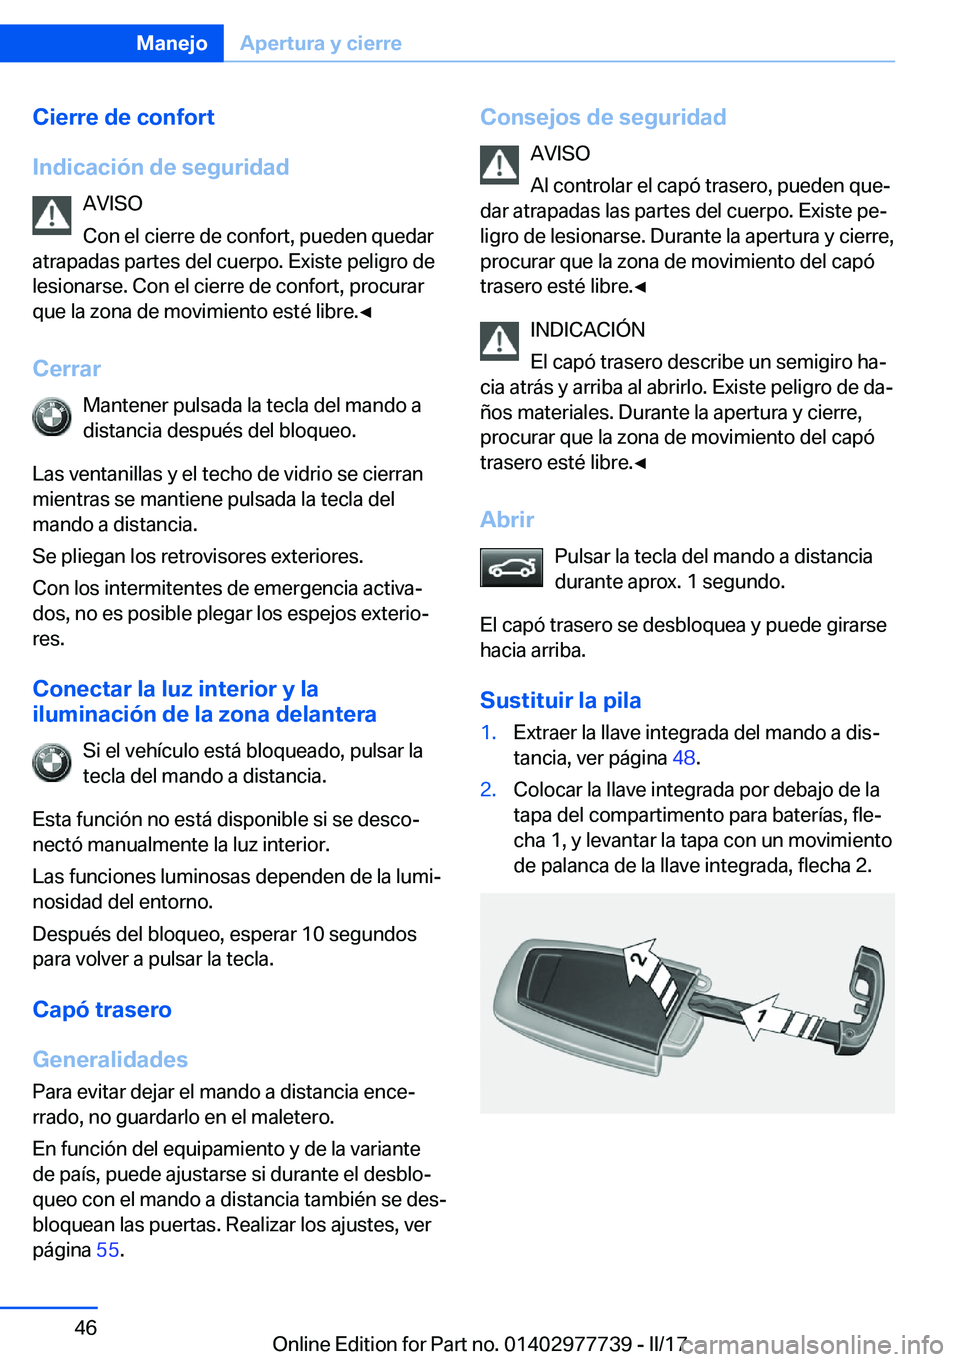 BMW 2 SERIES COUPE 2017  Manuales de Empleo (in Spanish) �C�i�e�r�r�e��d�e��c�o�n�f�o�r�t
�I�n�d�i�c�a�c�i�